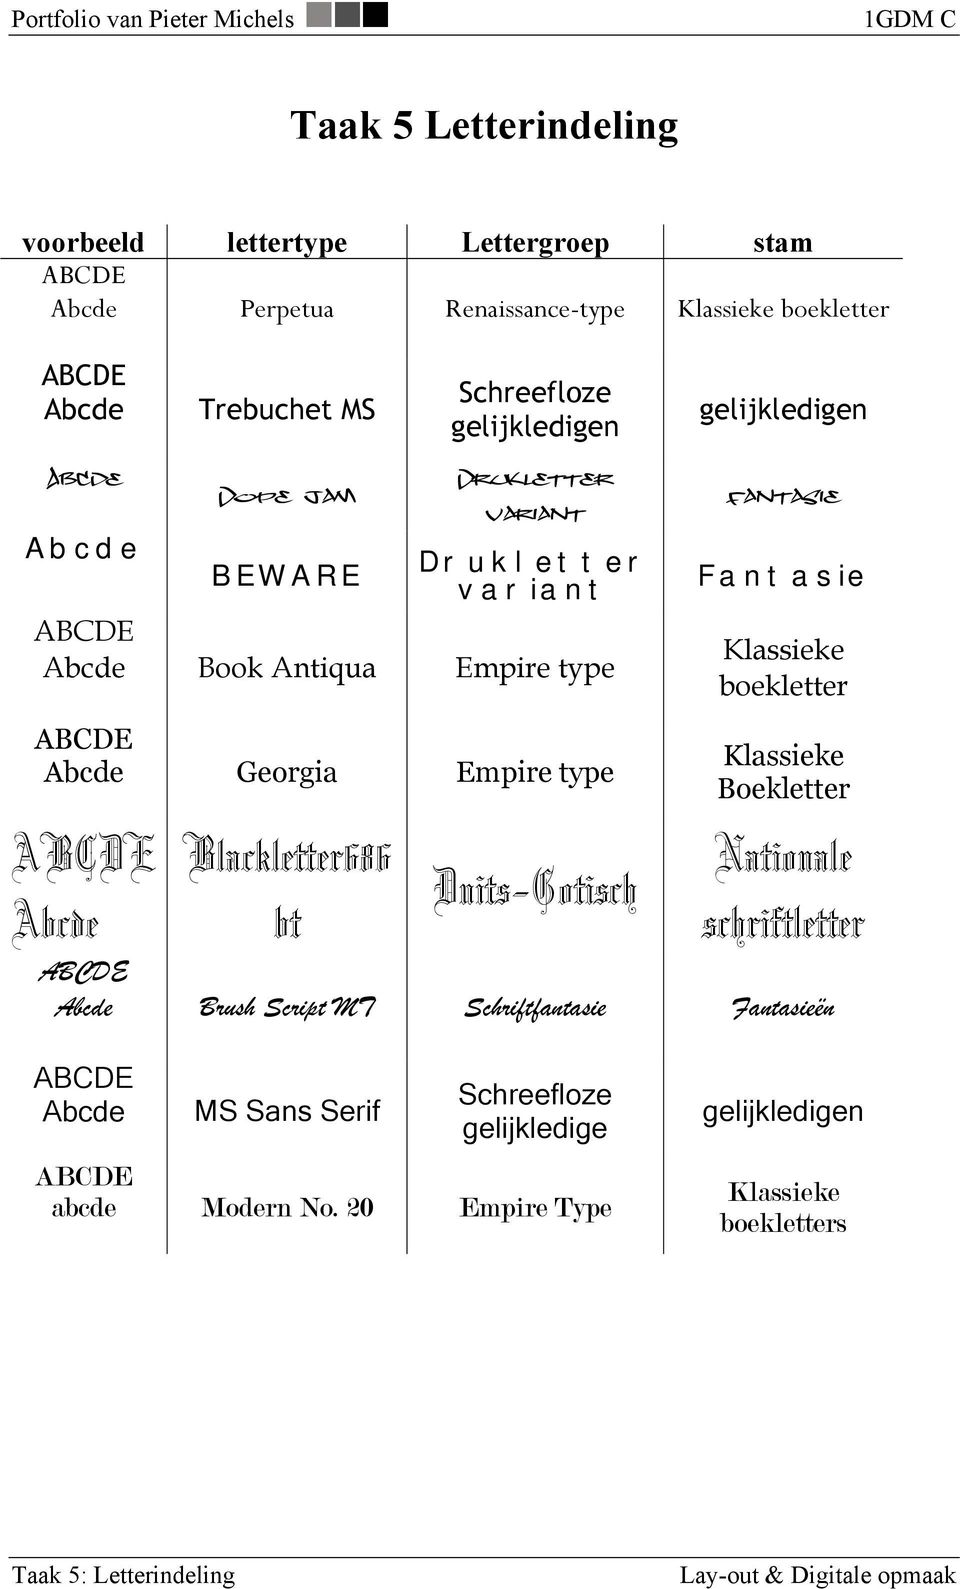 Blackletter686 bt Duits-Gotisch gelijkledigen fantasie Fantasie Klassieke boekletter Klassieke Boekletter Nationale schriftletter ABCDE Abcde Brush Script MT